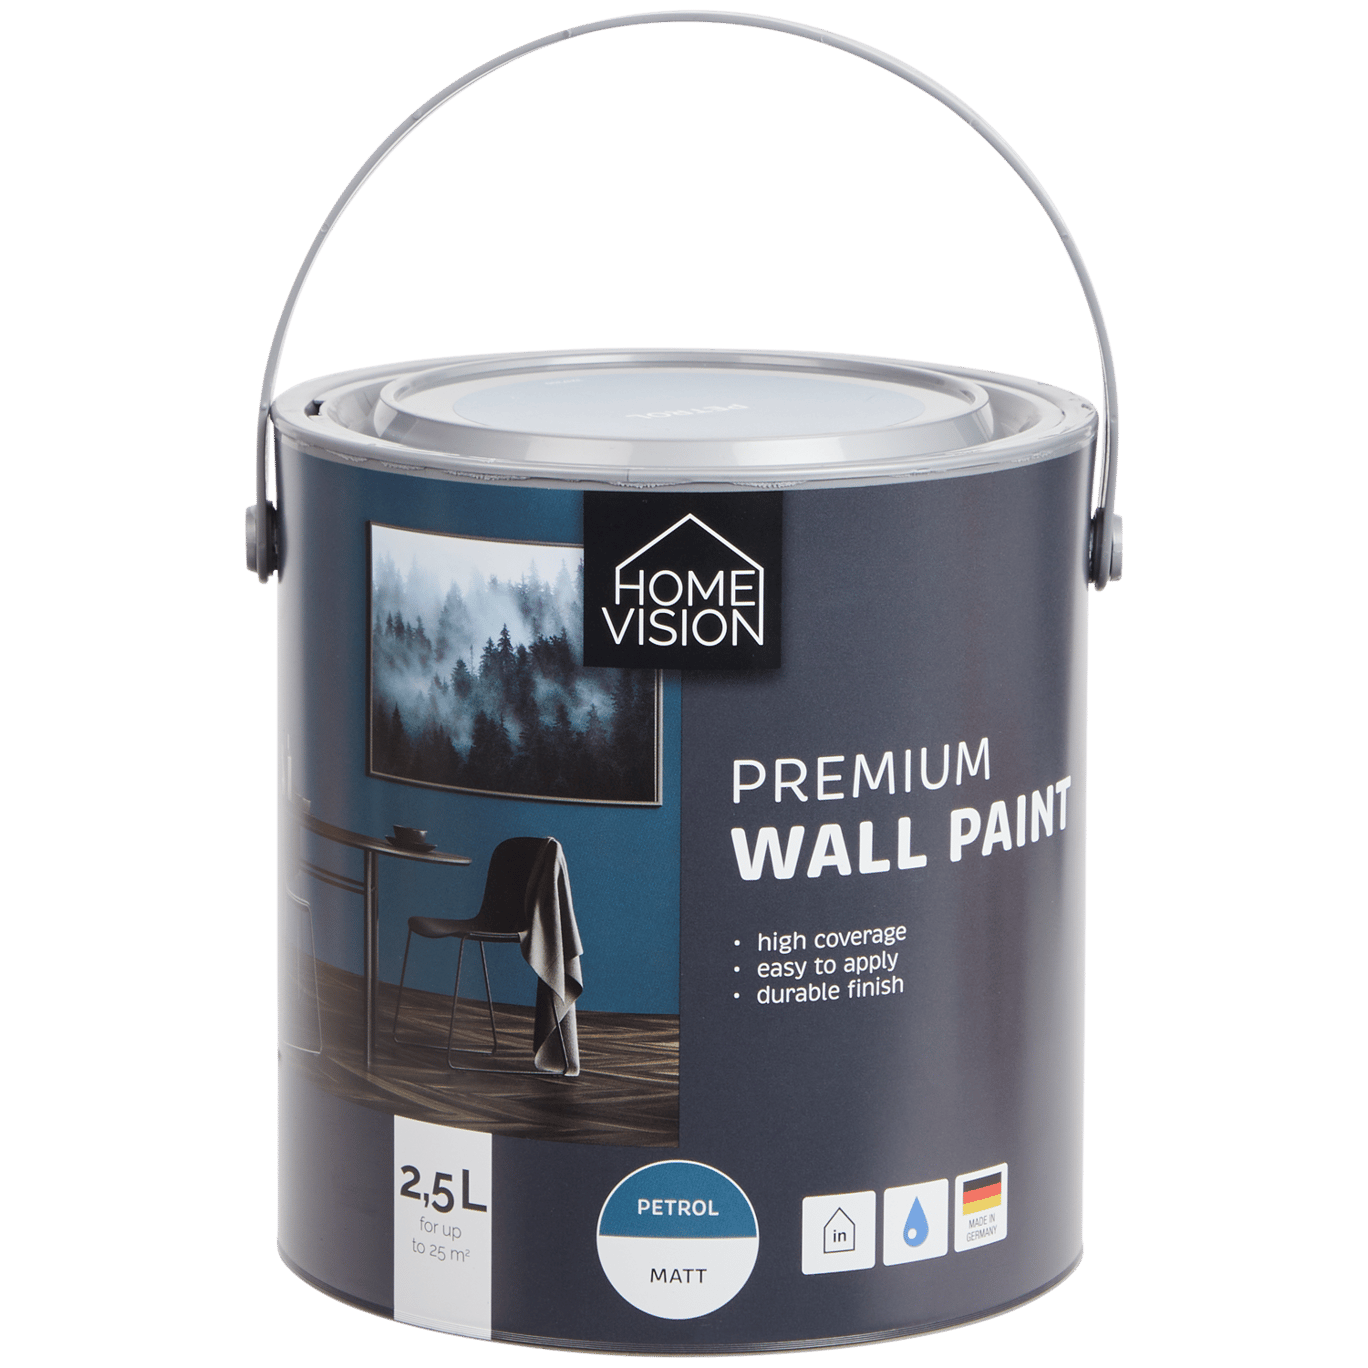 Pintura de pared mate Home Vision Petróleo